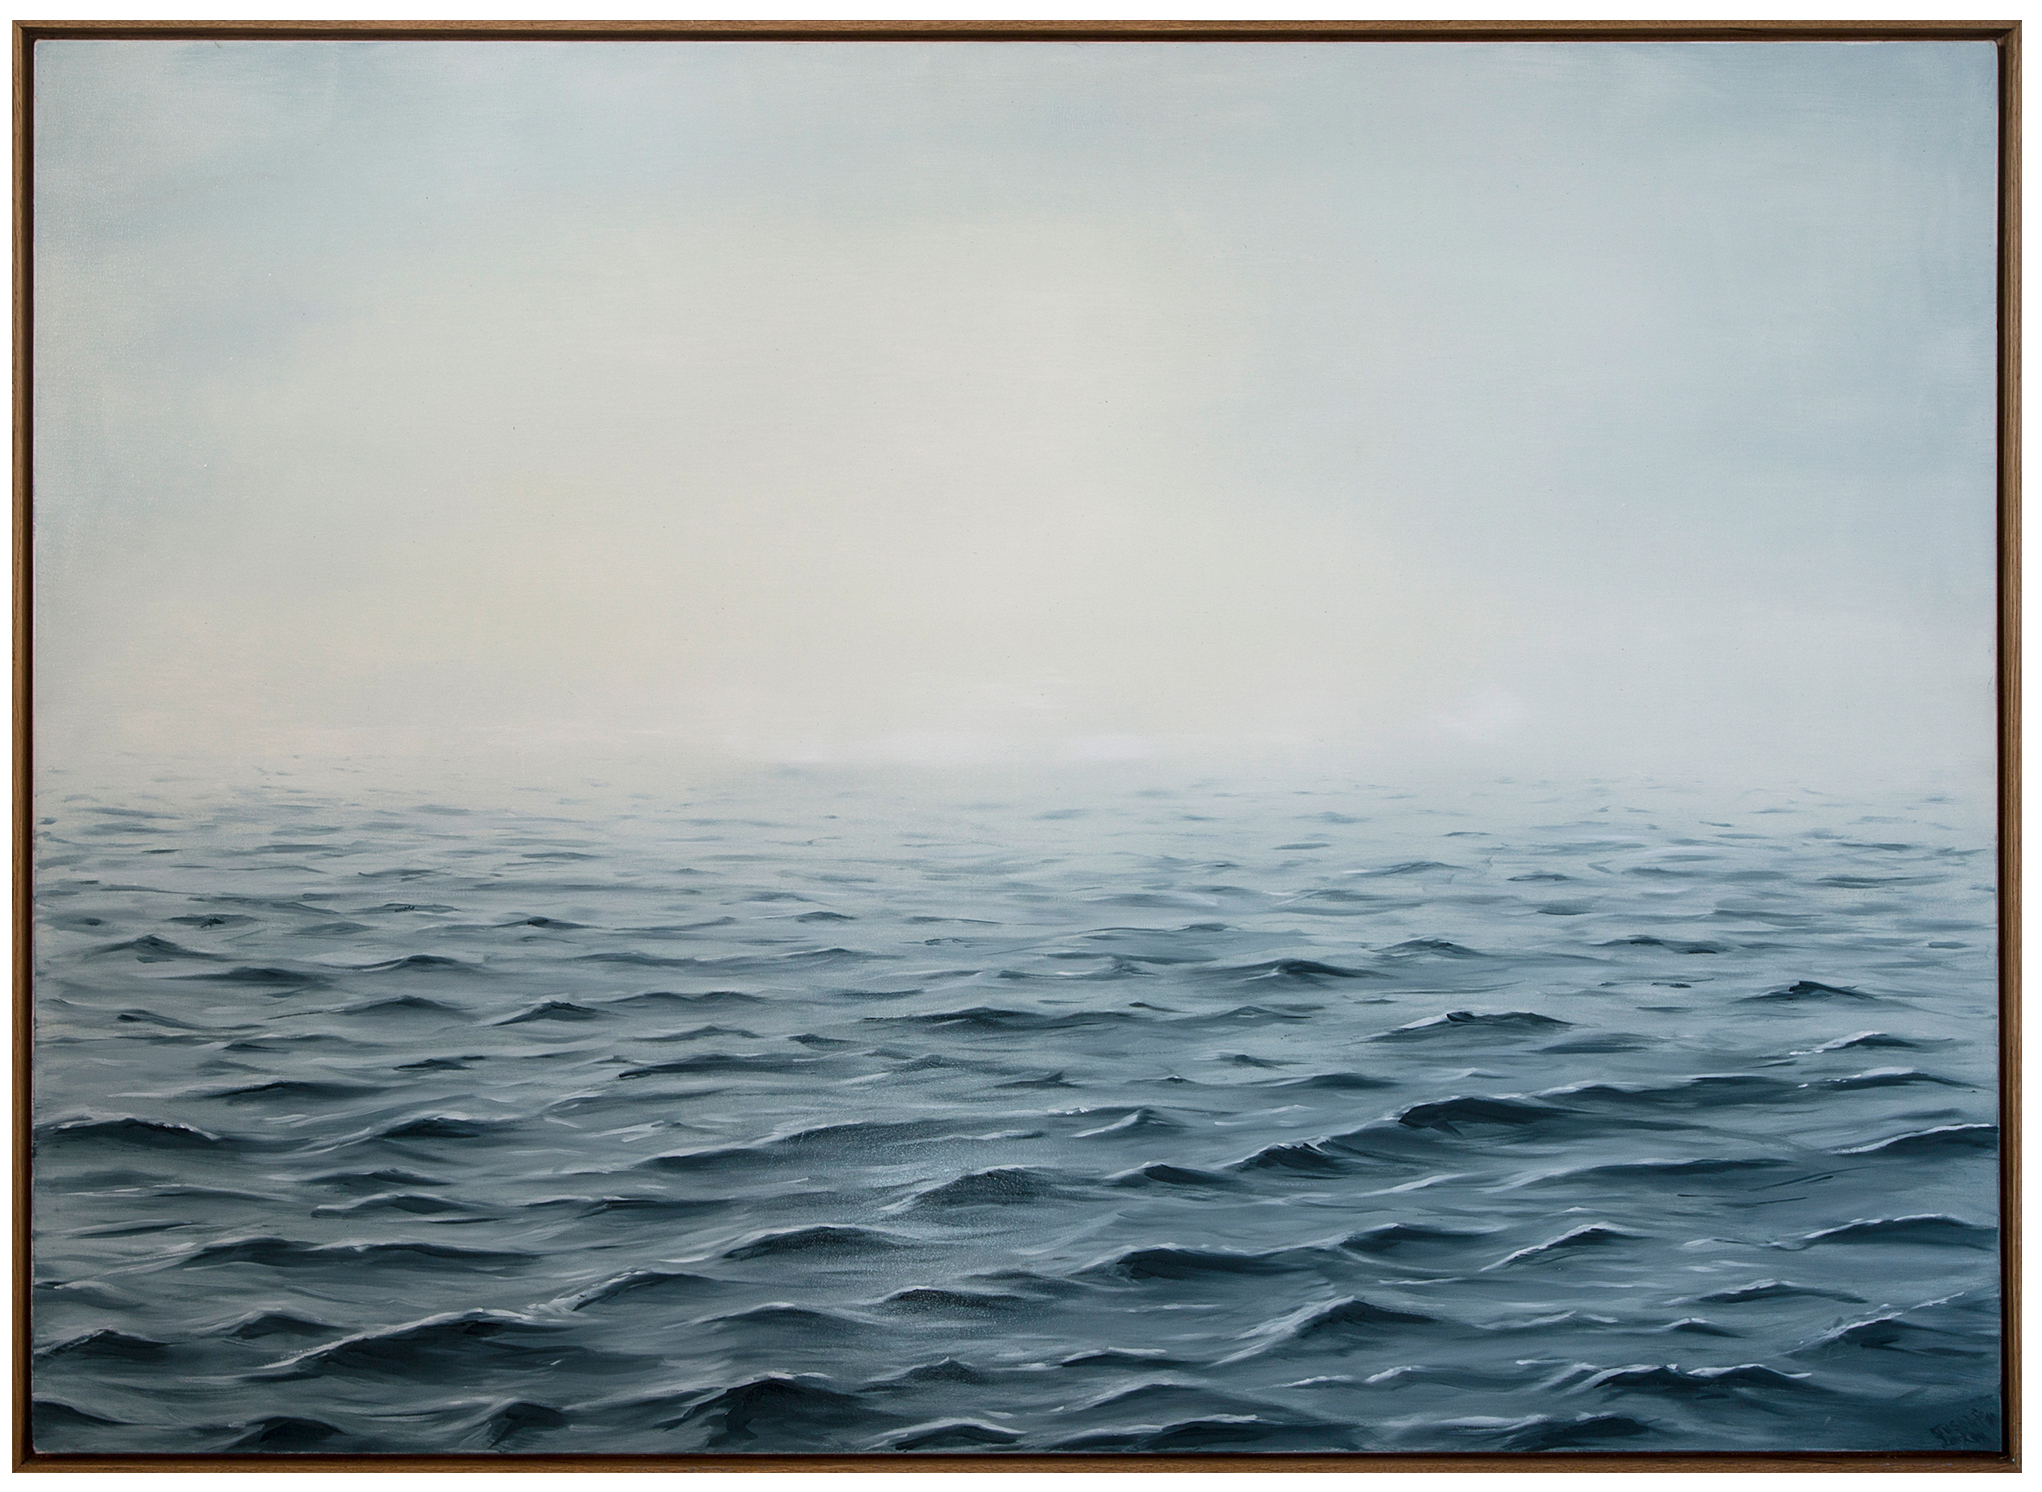 WaterOil on canvas143 cm x 103 cm2015